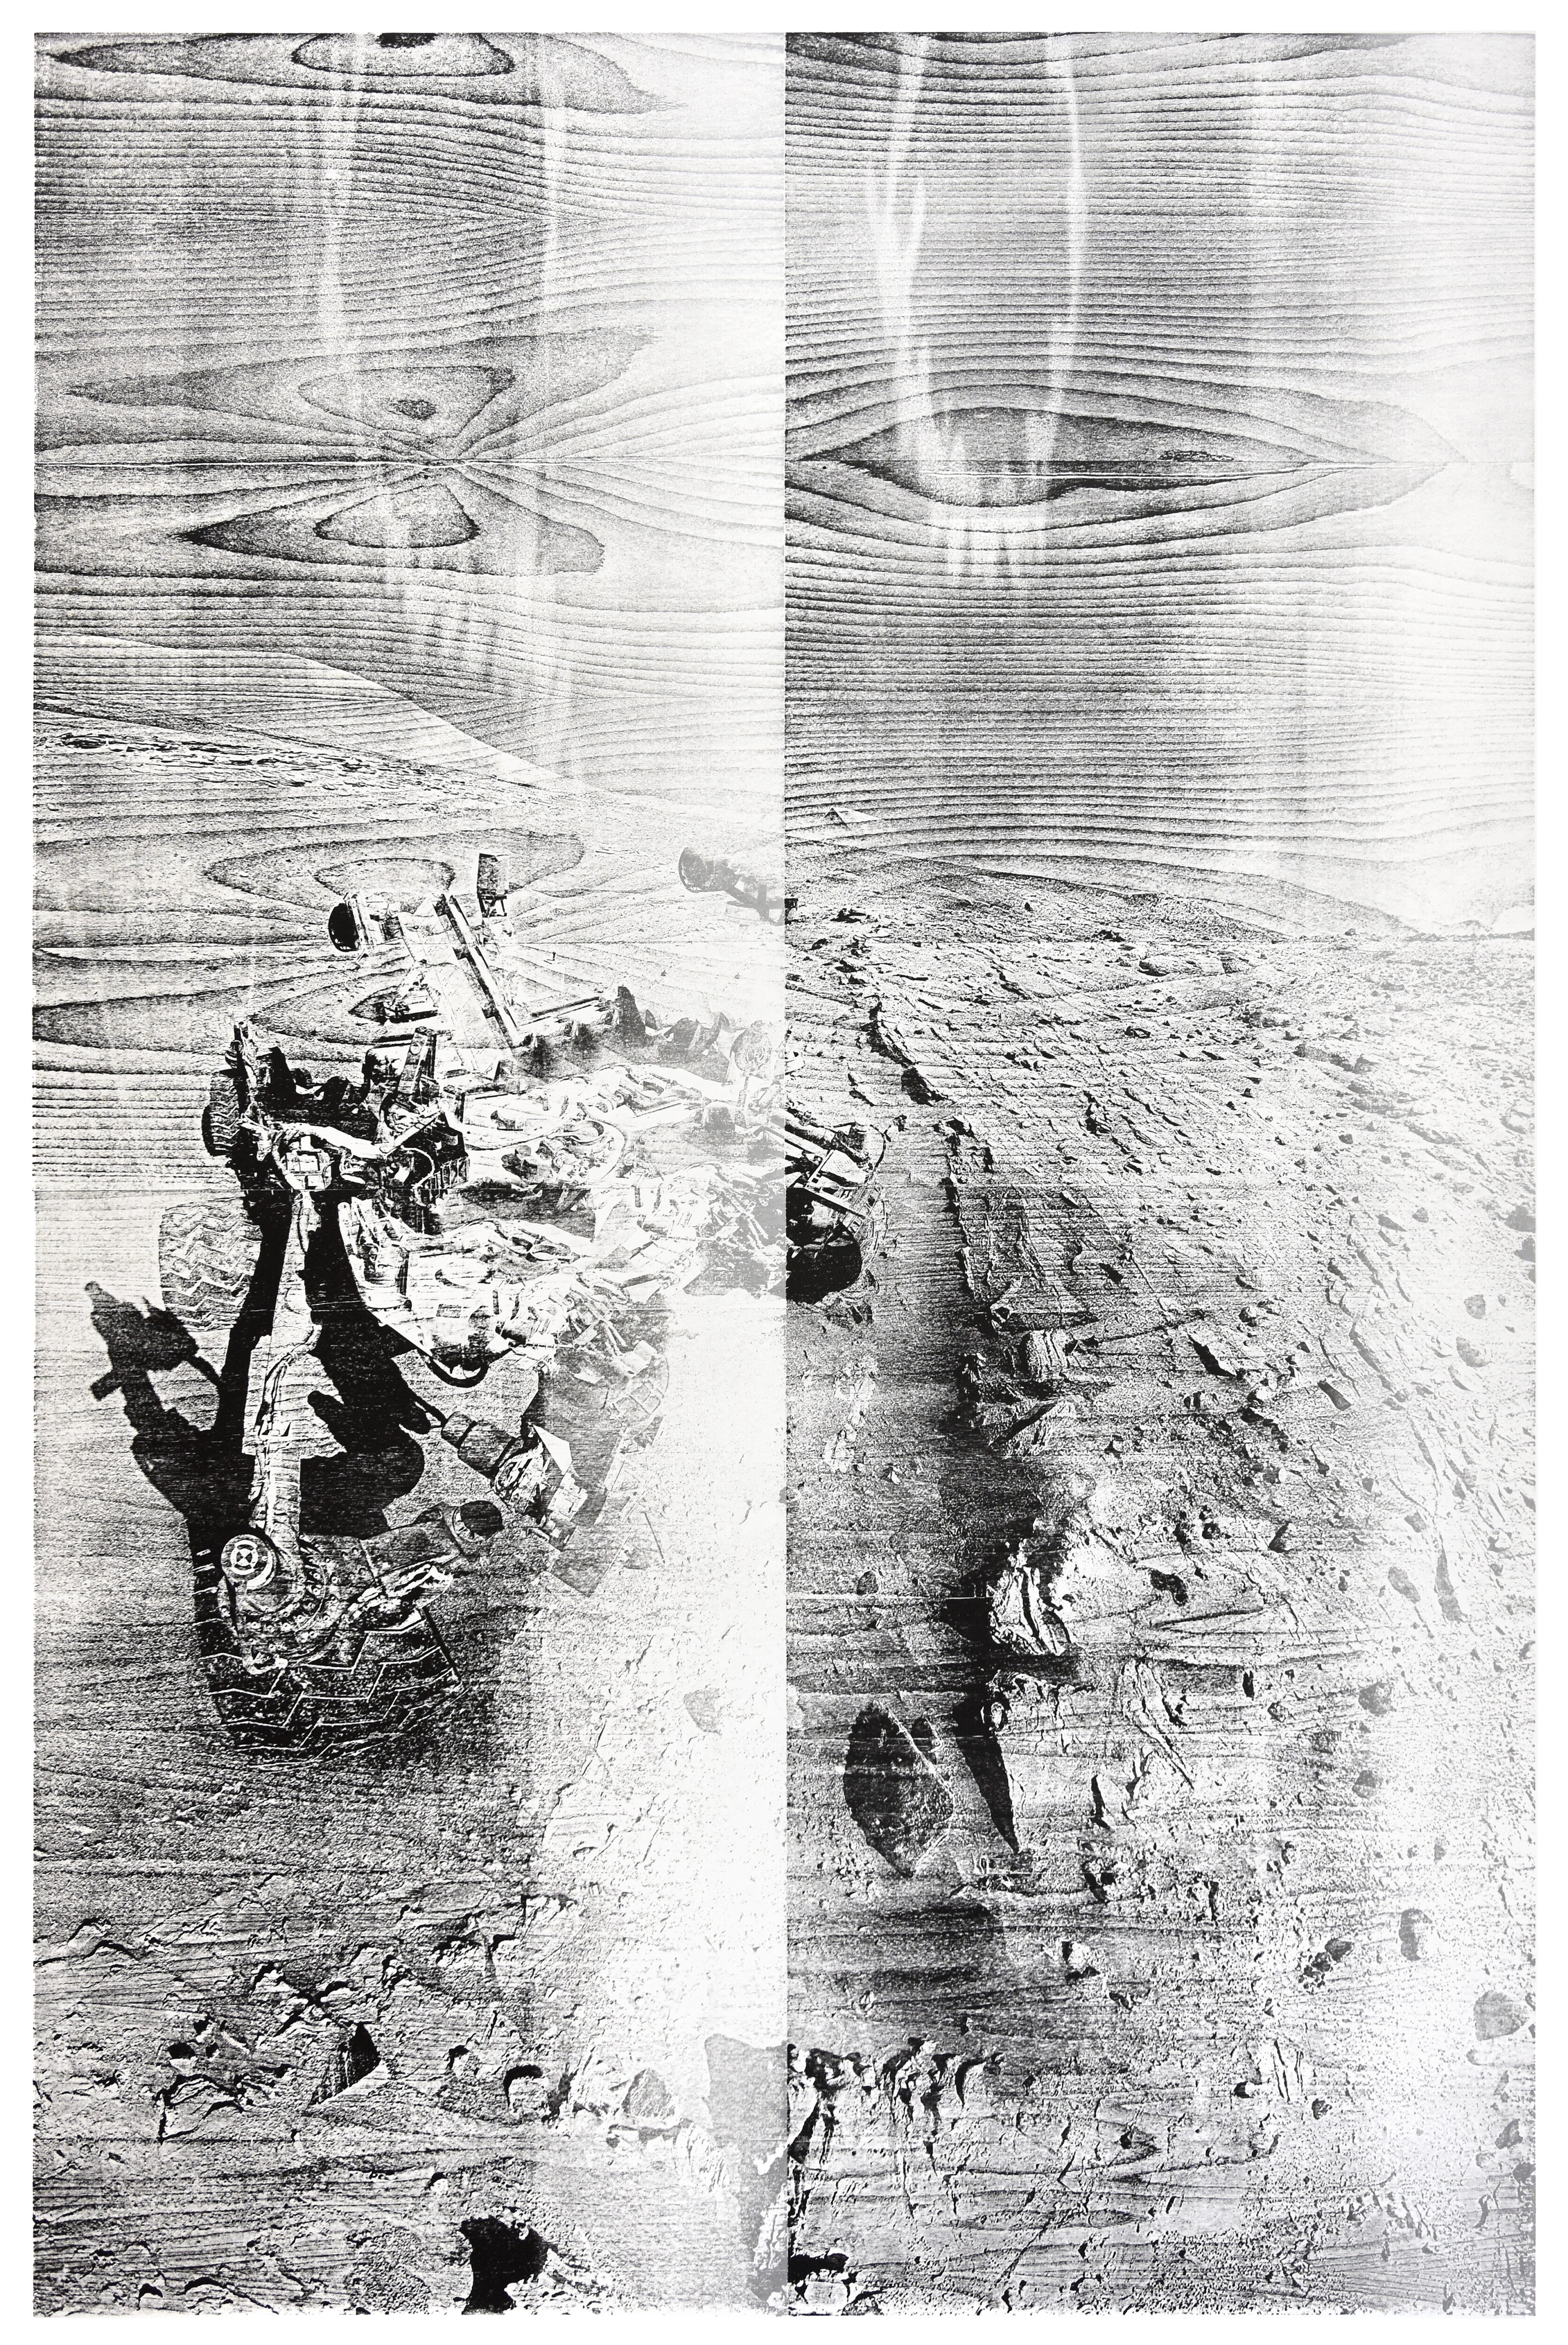 Windj, 2018, wood engraving (beech), 194,2 x 130,2 cm, Genaro Strobel